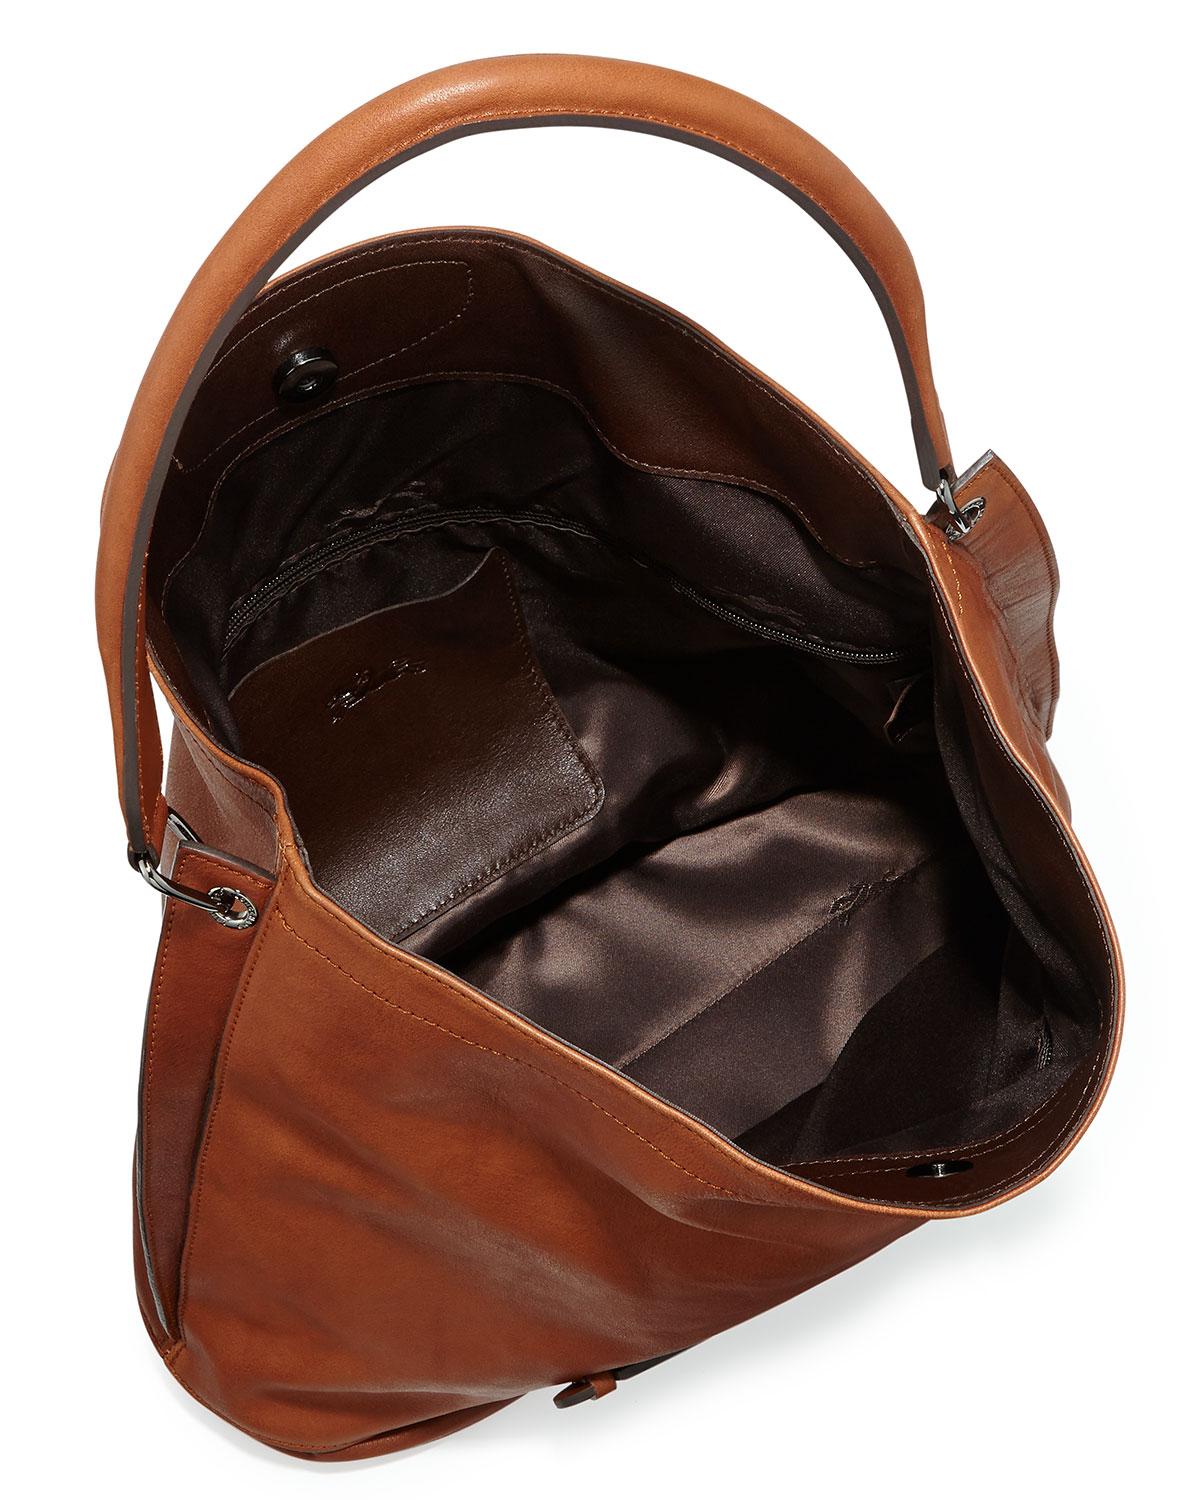 Longchamp 3d Leather Hobo Bag in Cognac (Brown) - Lyst